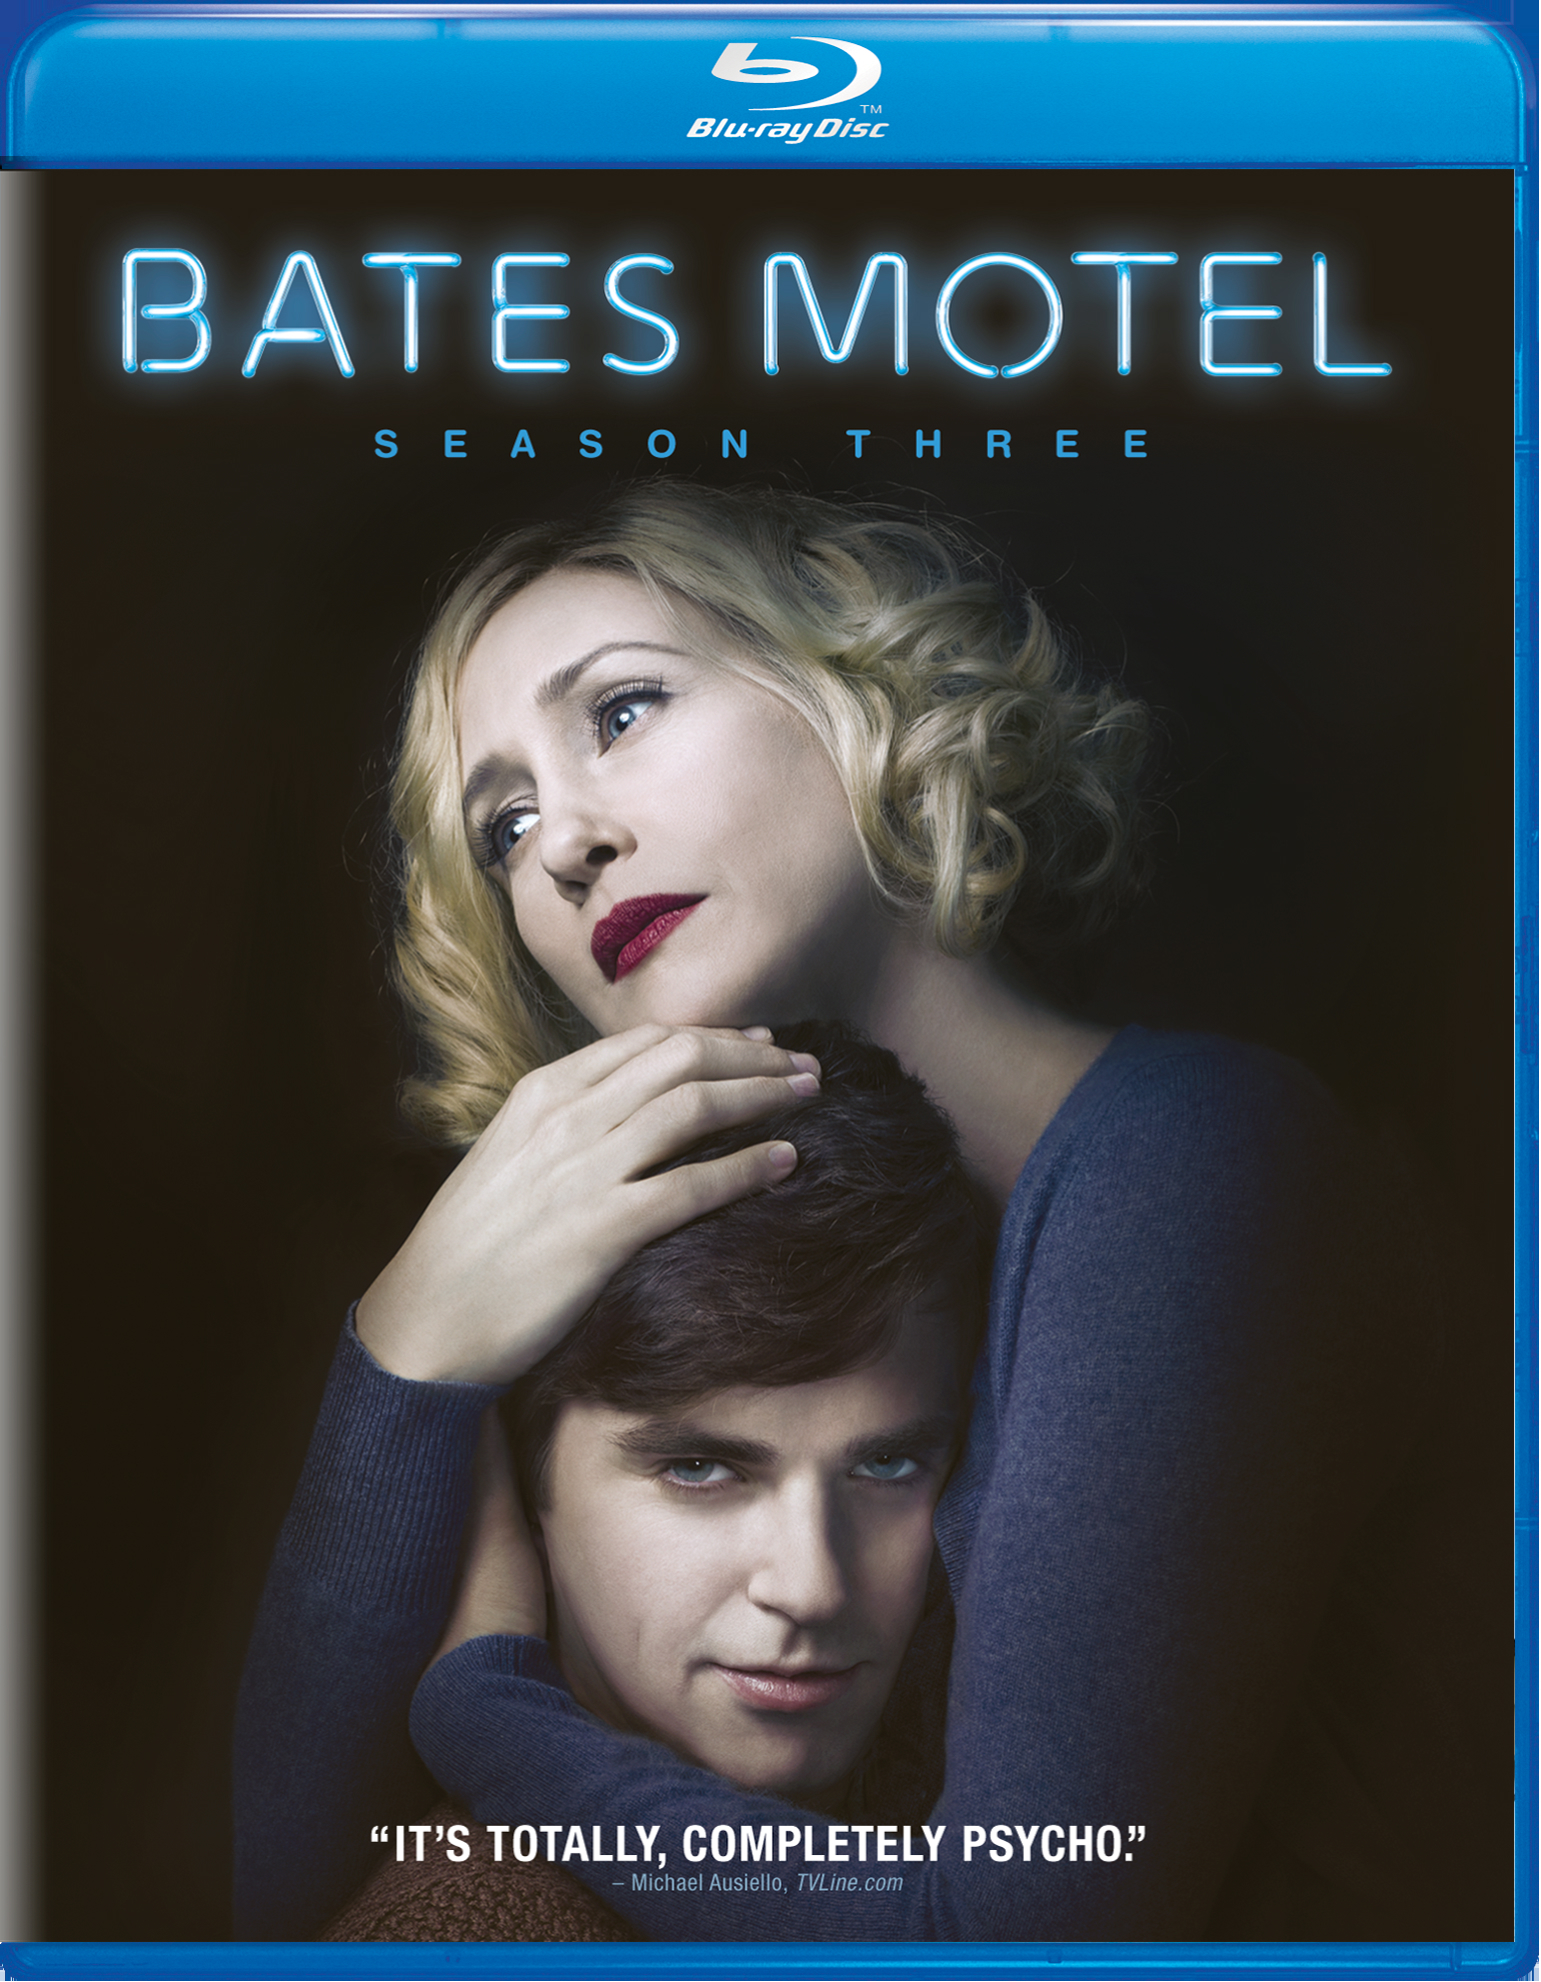 Bates Motel: Season Three (Blu-ray New Box Art) - Blu-ray   - Drama Television On Blu-ray - TV Shows On GRUV